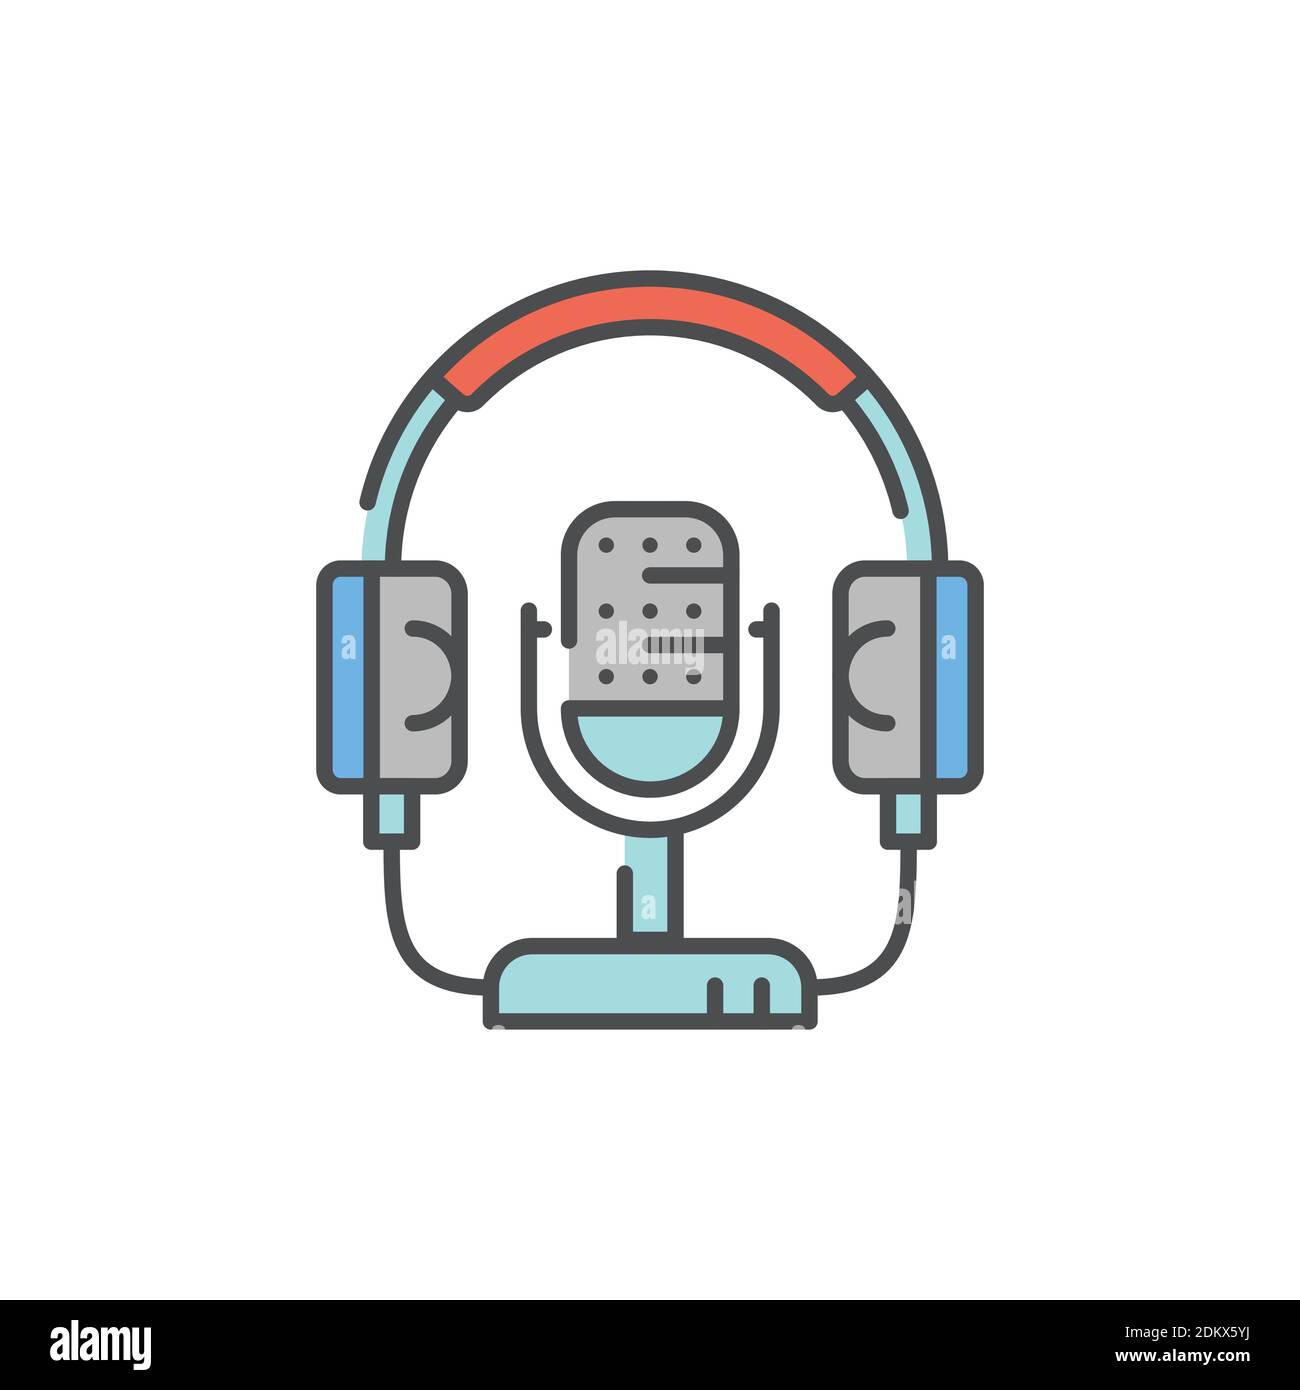 Headphones earphones and stylized stickers icons Vector Image